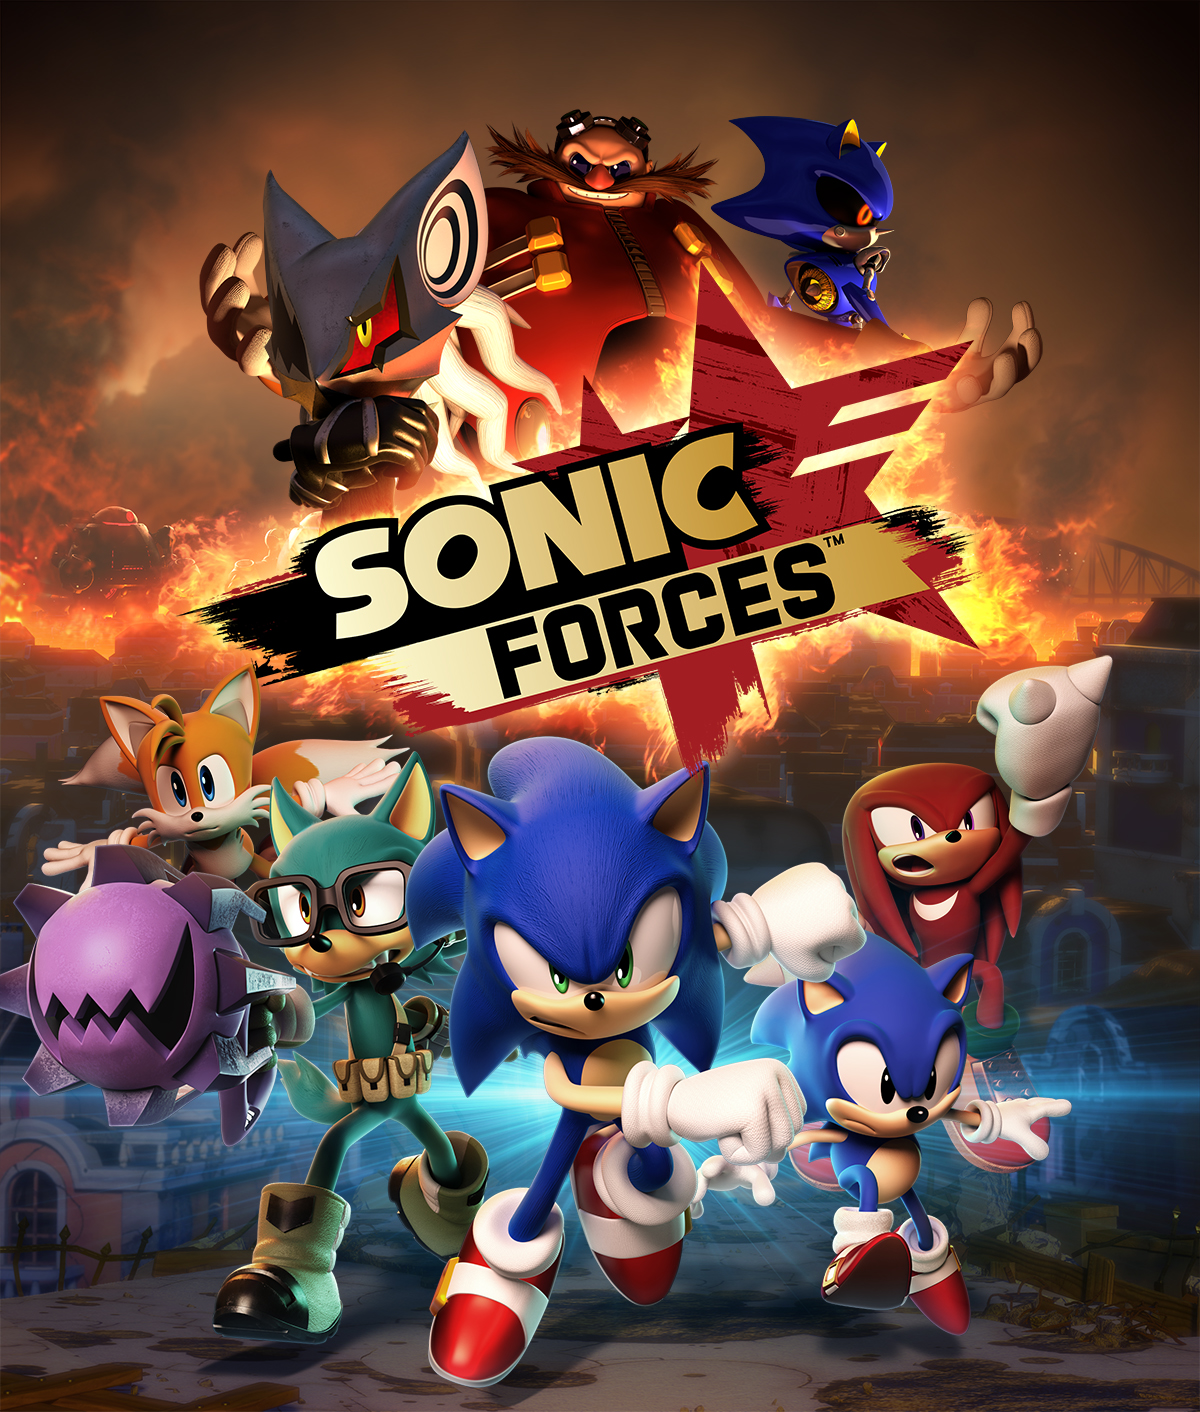 Sonic_Forces_box_artwork.jpg